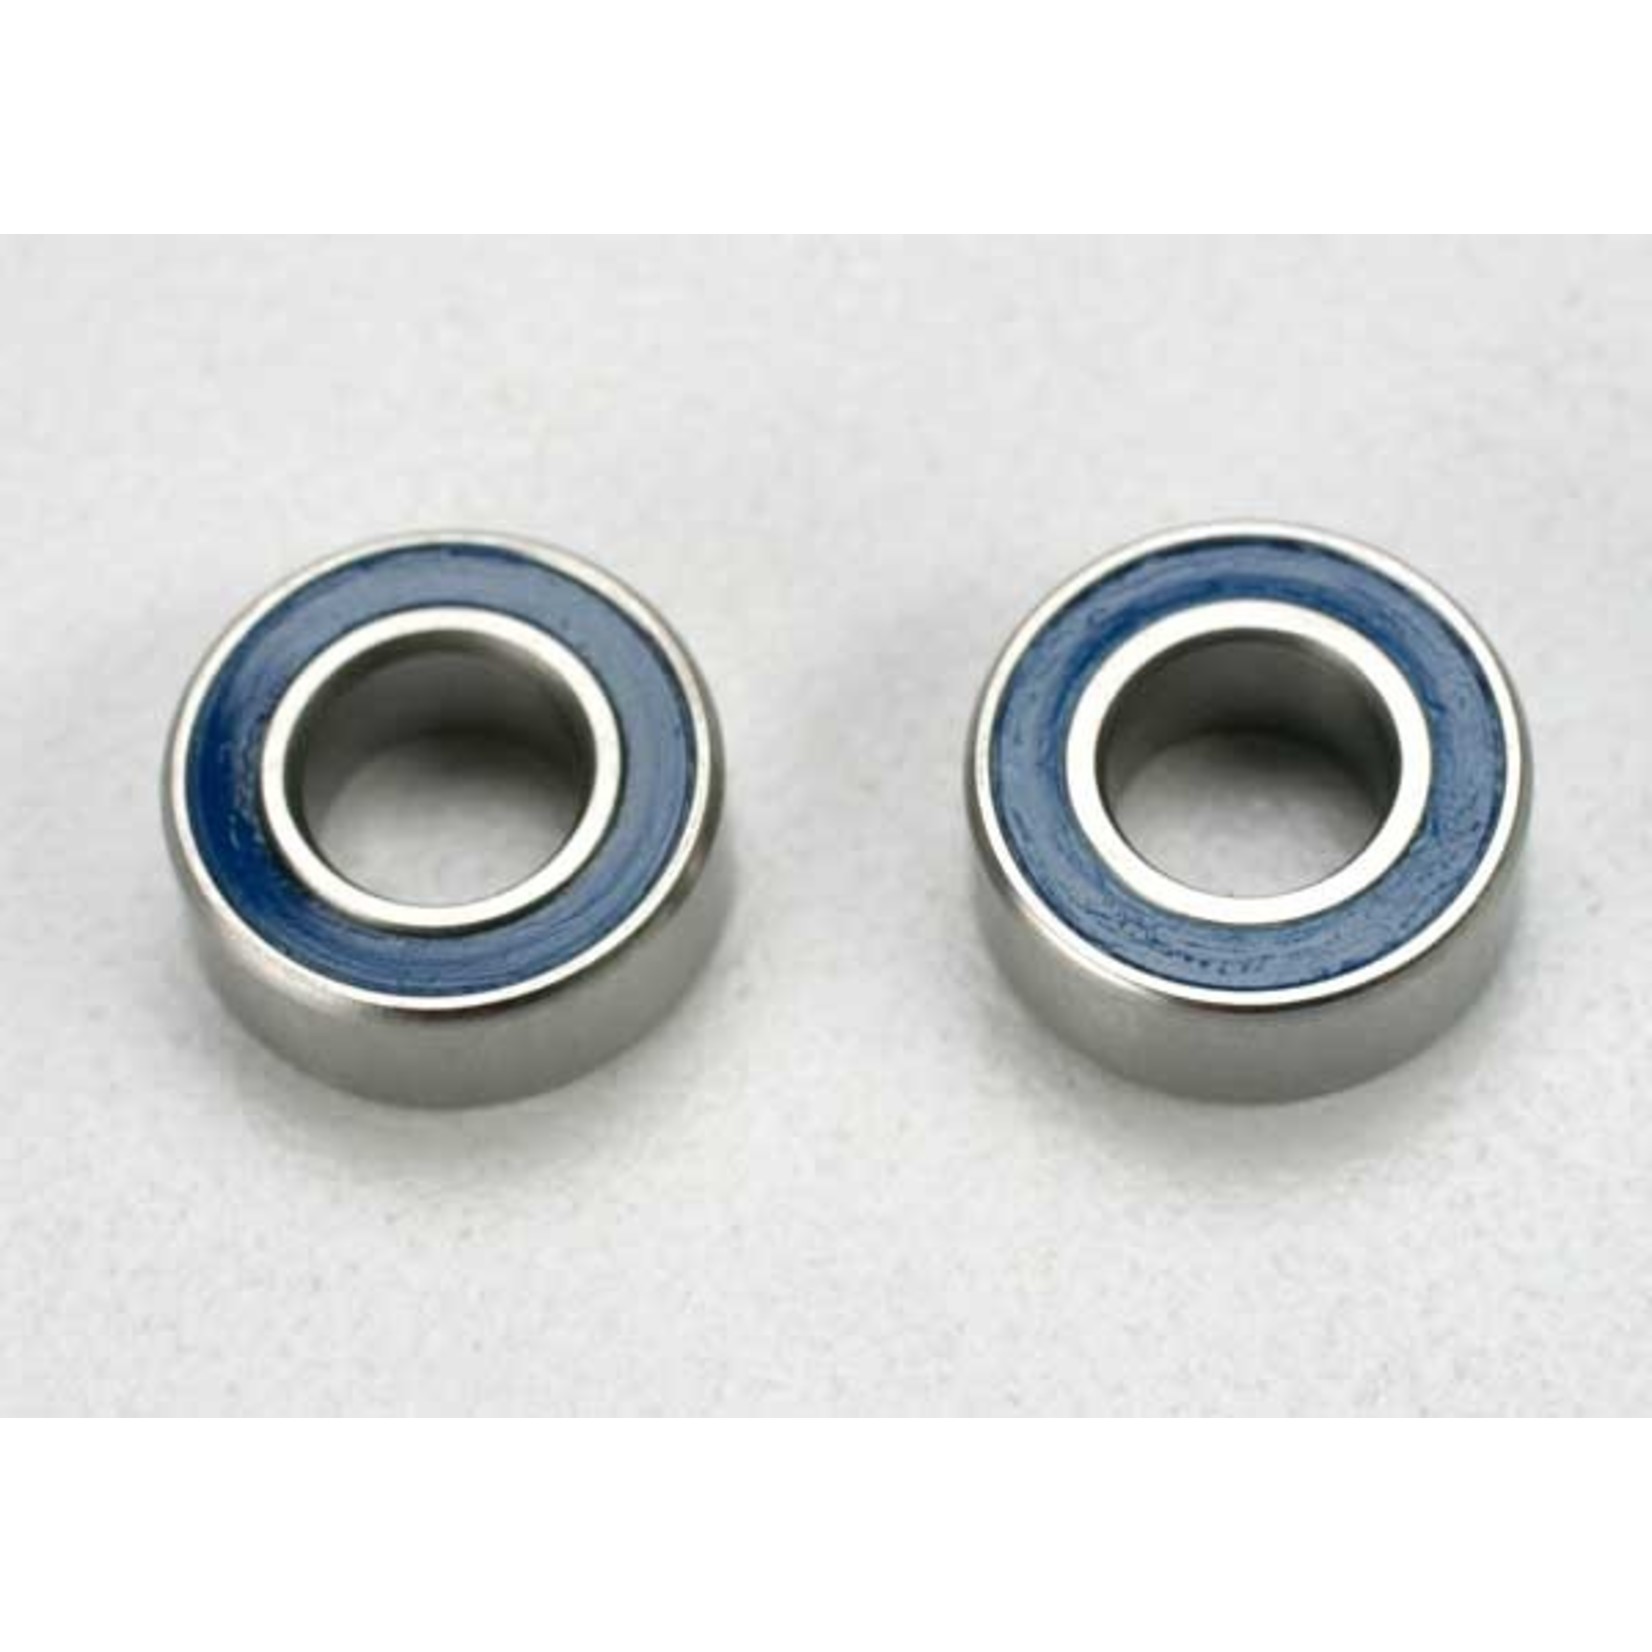 Traxxas 5115 - Ball bearings, blue rubber sealed (5x10x4mm) (2)